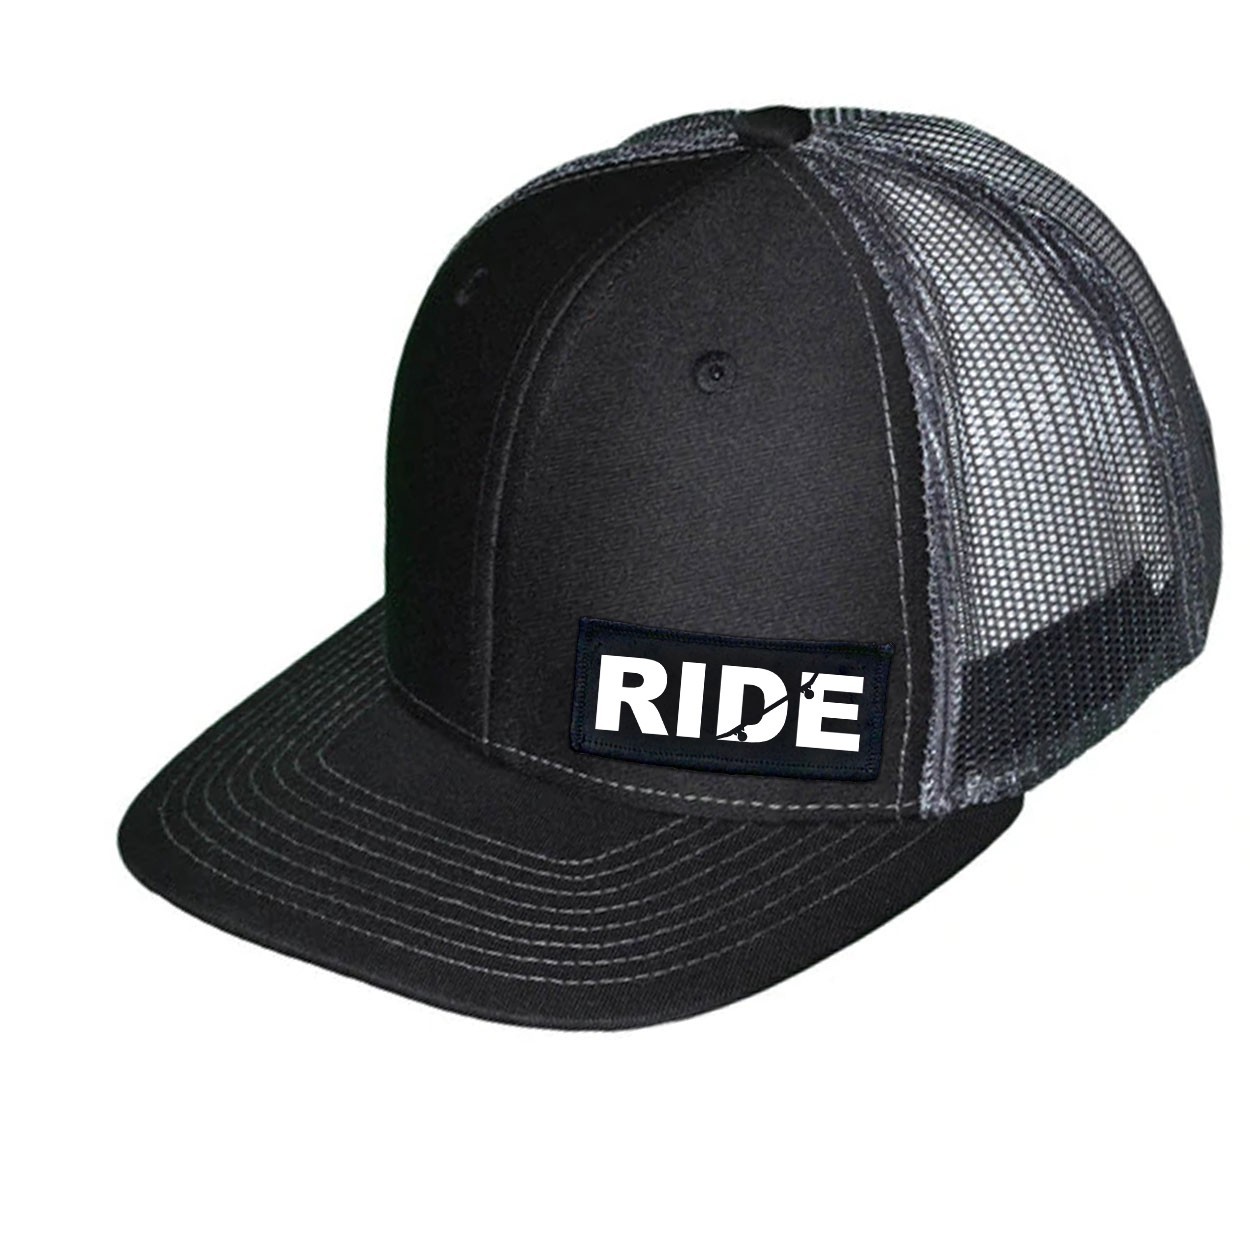 Ride Skateboard Logo Night Out Woven Patch Snapback Trucker Hat Black/Charcoal (White Logo)